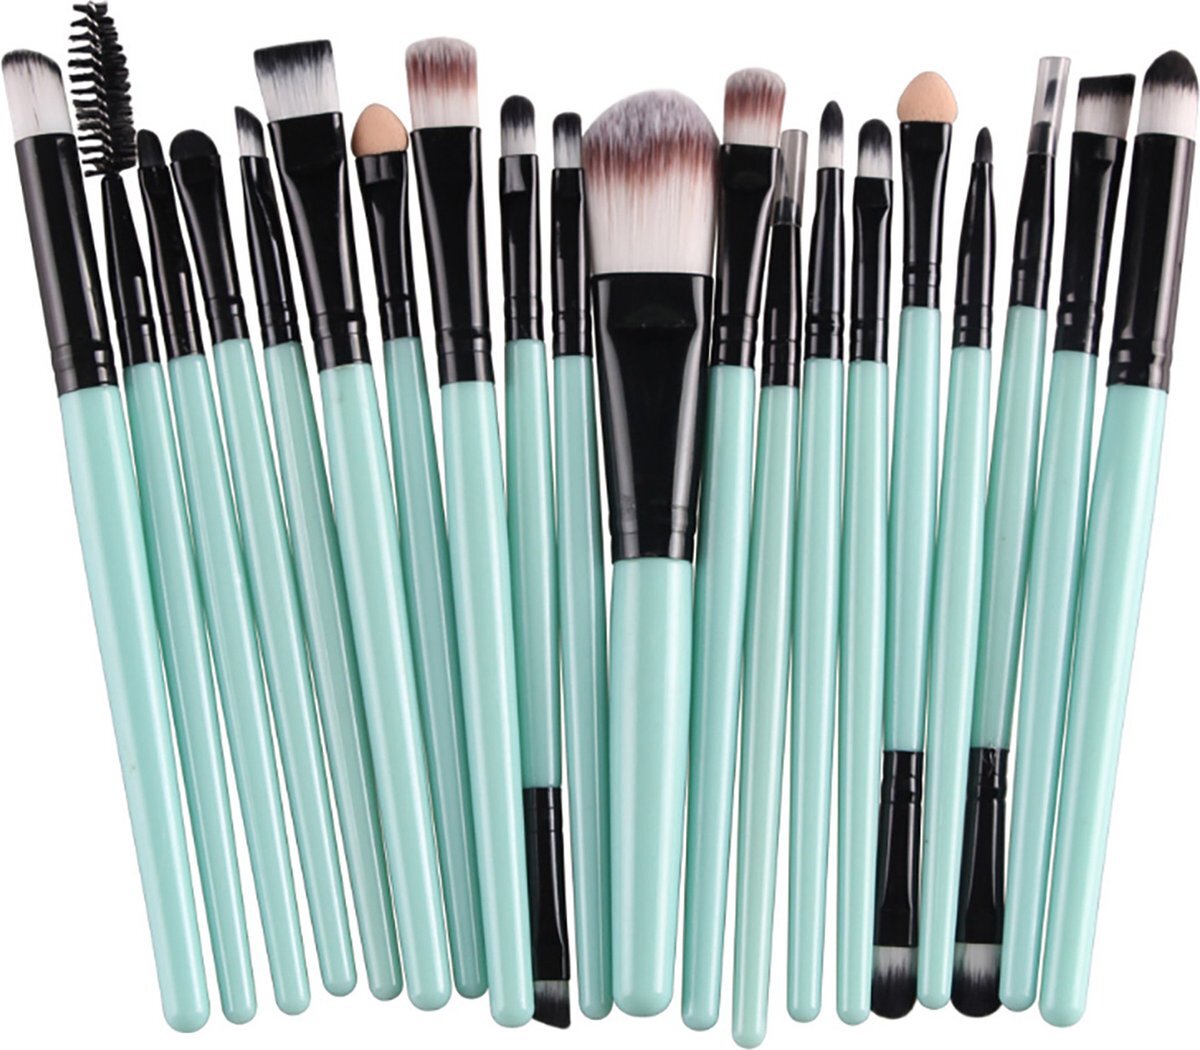 CHPN Make-up kwasten - Make-up kwasten set - Kwasten set - Kwasten - Make-up kwast - Beauty tools - Turquoise/zwart - Make-up tools